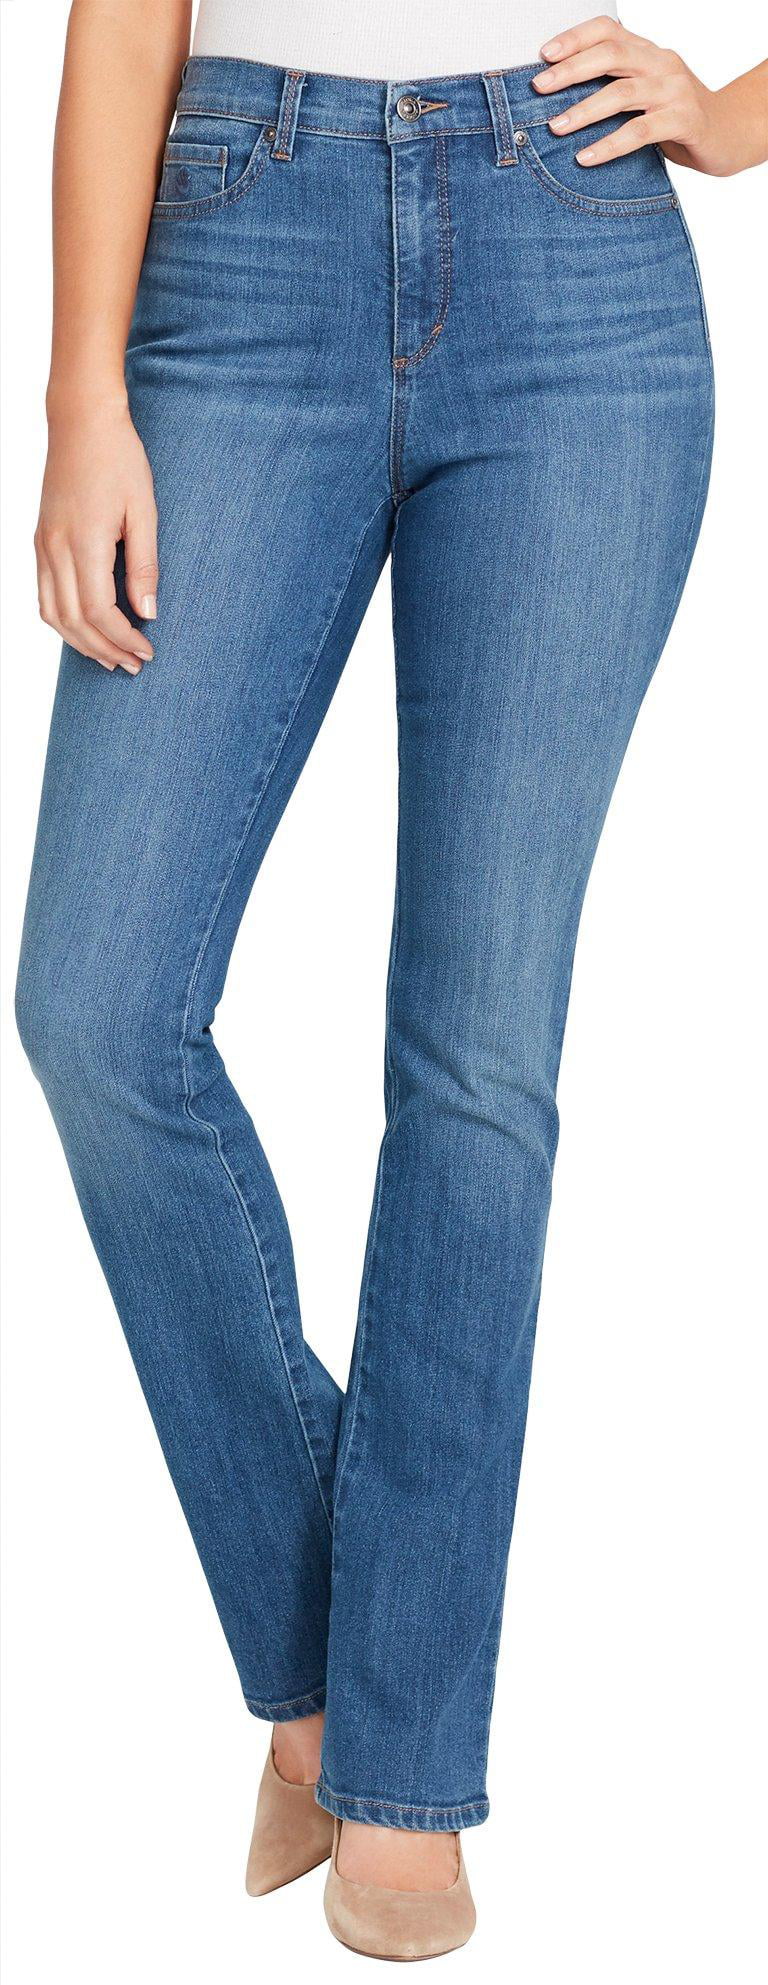 gloria vanderbilt amanda bootcut jeans